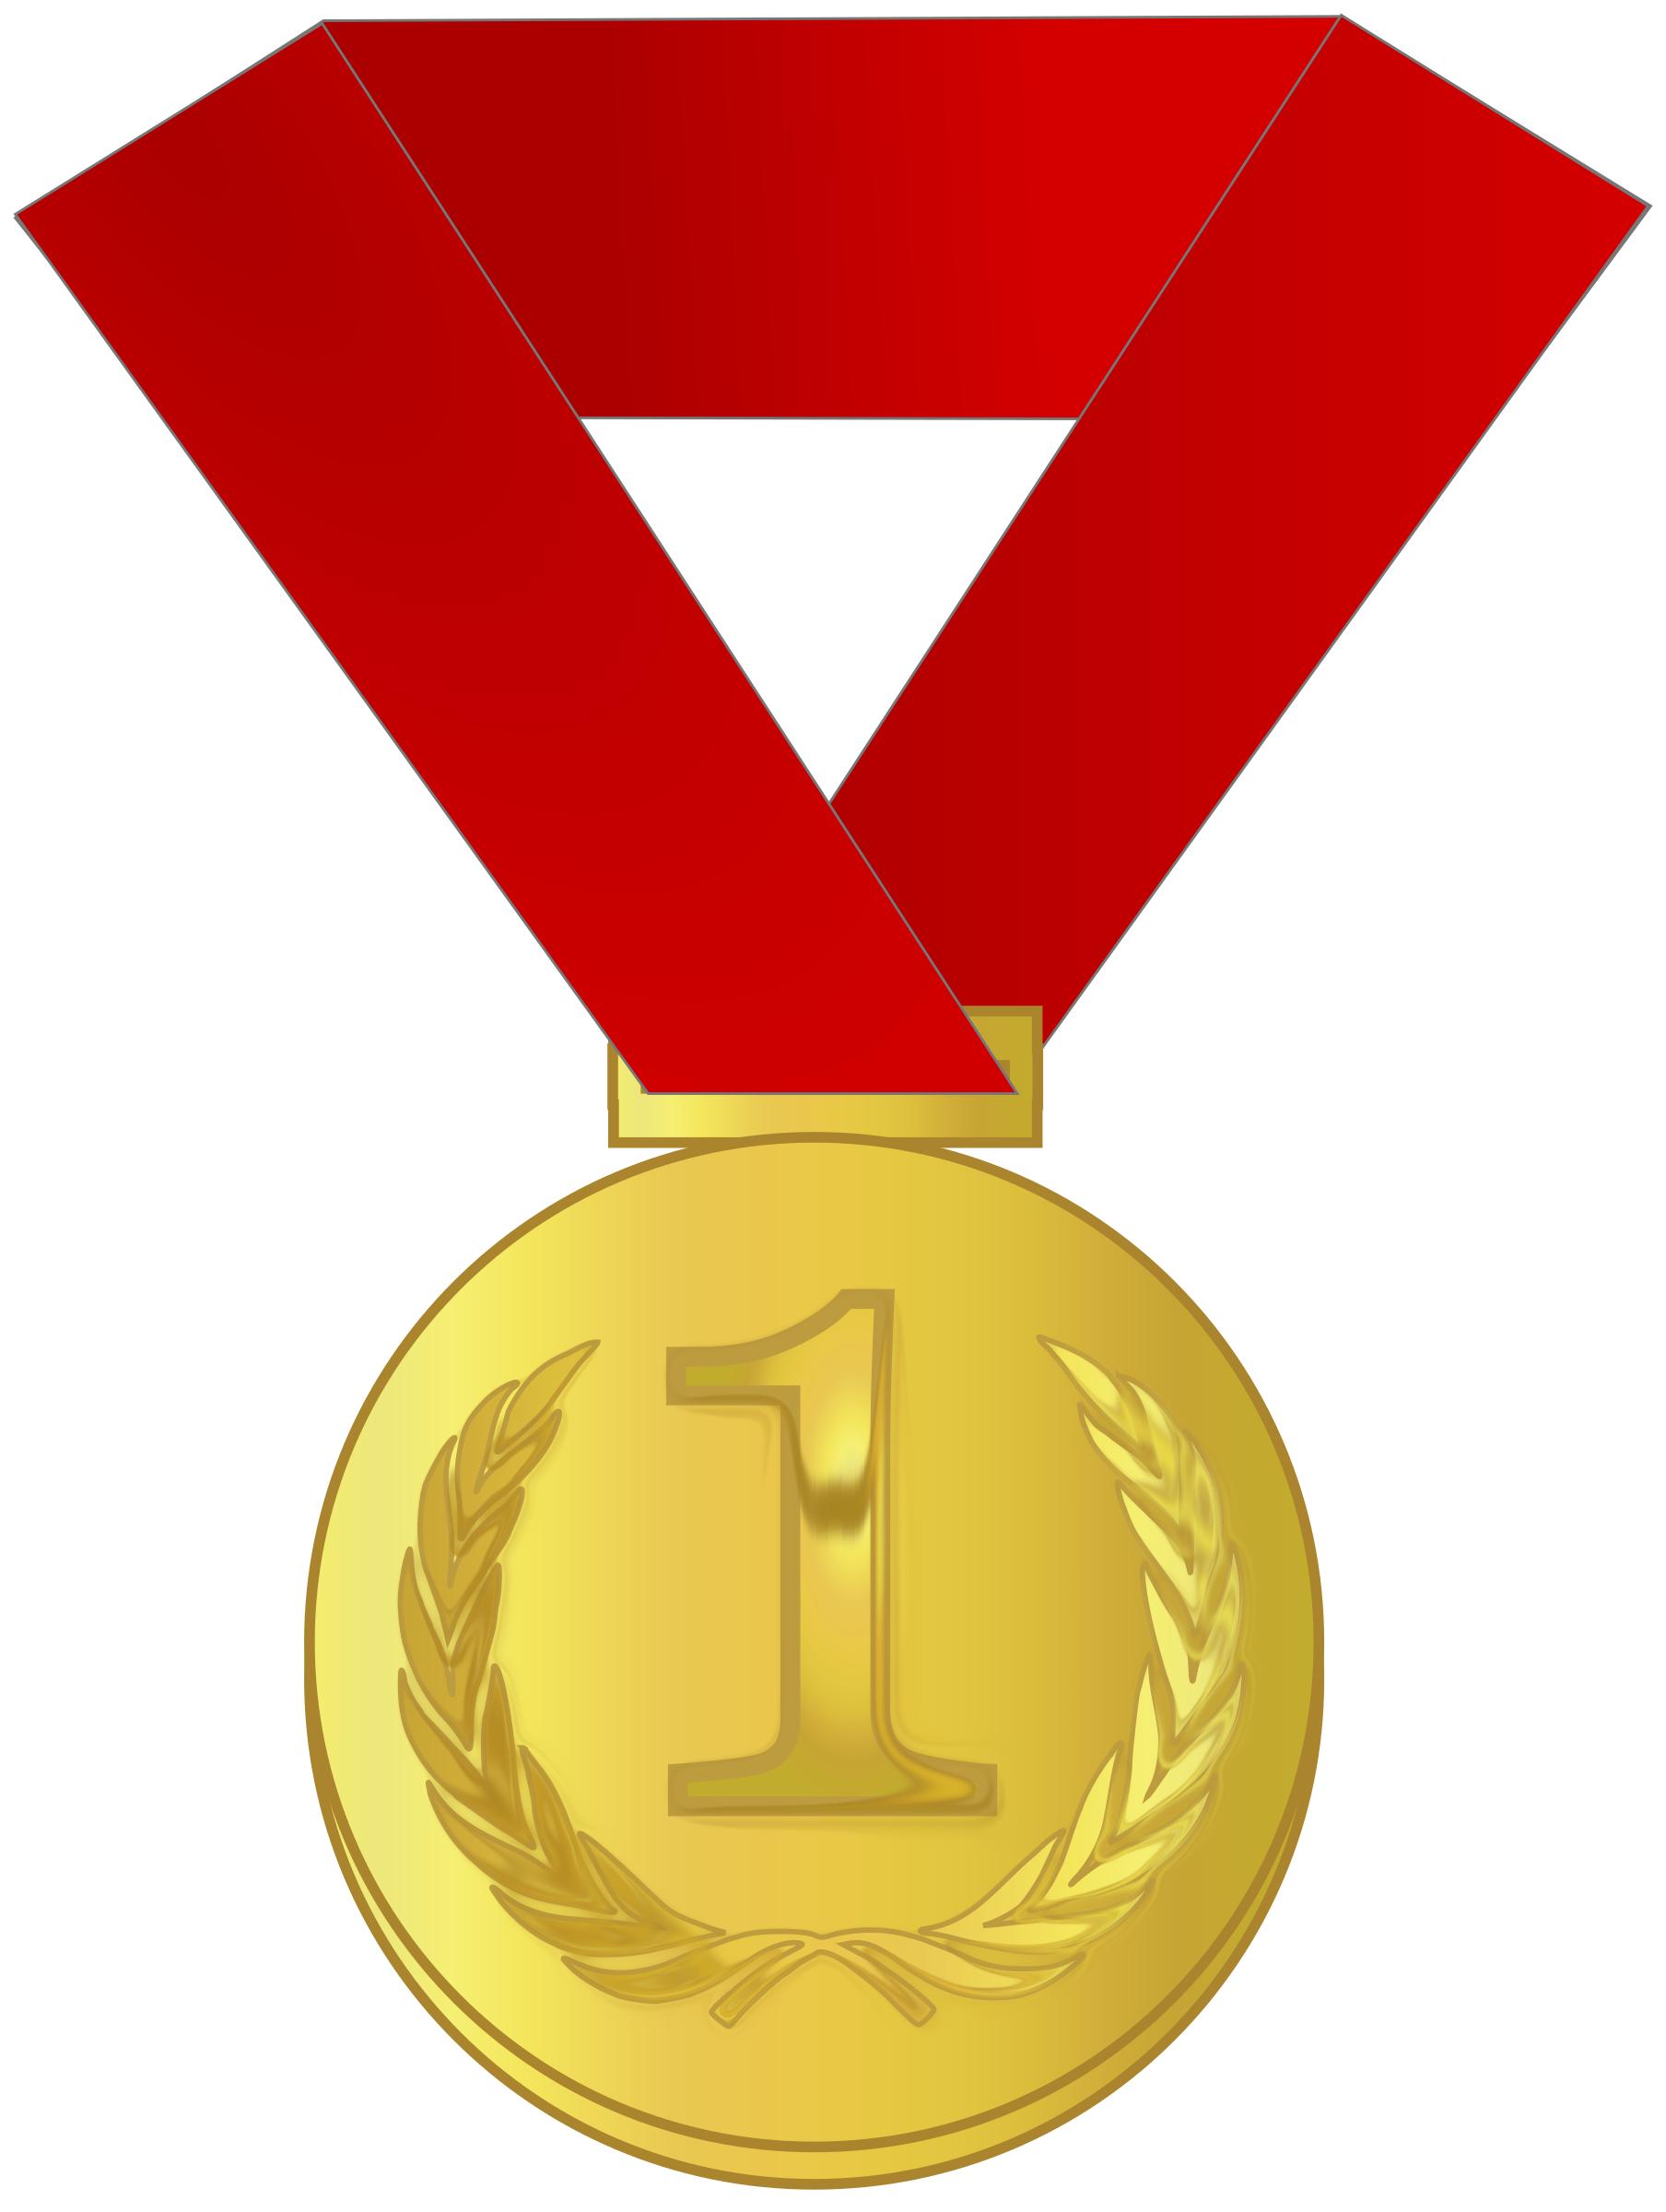 Awards clipart medallion. Gold medal award icons